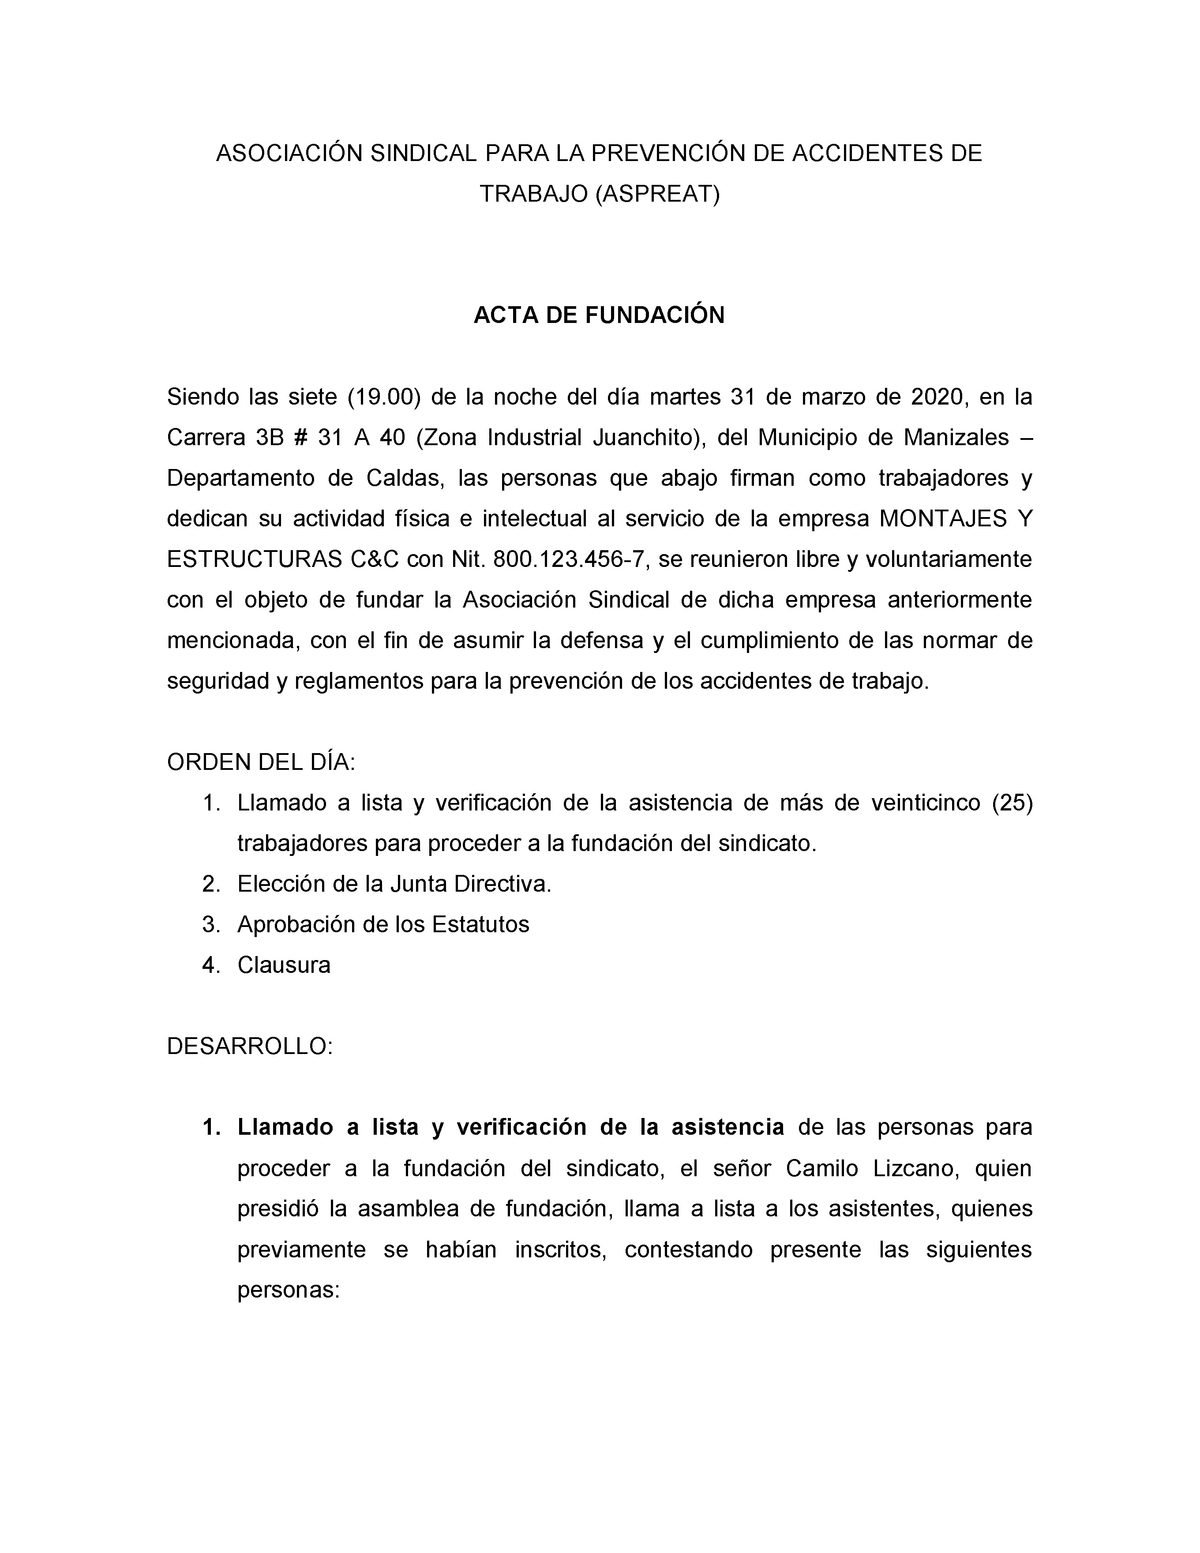 ACTA Constitución Sindicato - ASOCIACIÓN SINDICAL PARA LA PREVENCIÓN DE  ACCIDENTES DE TRABAJO - Studocu